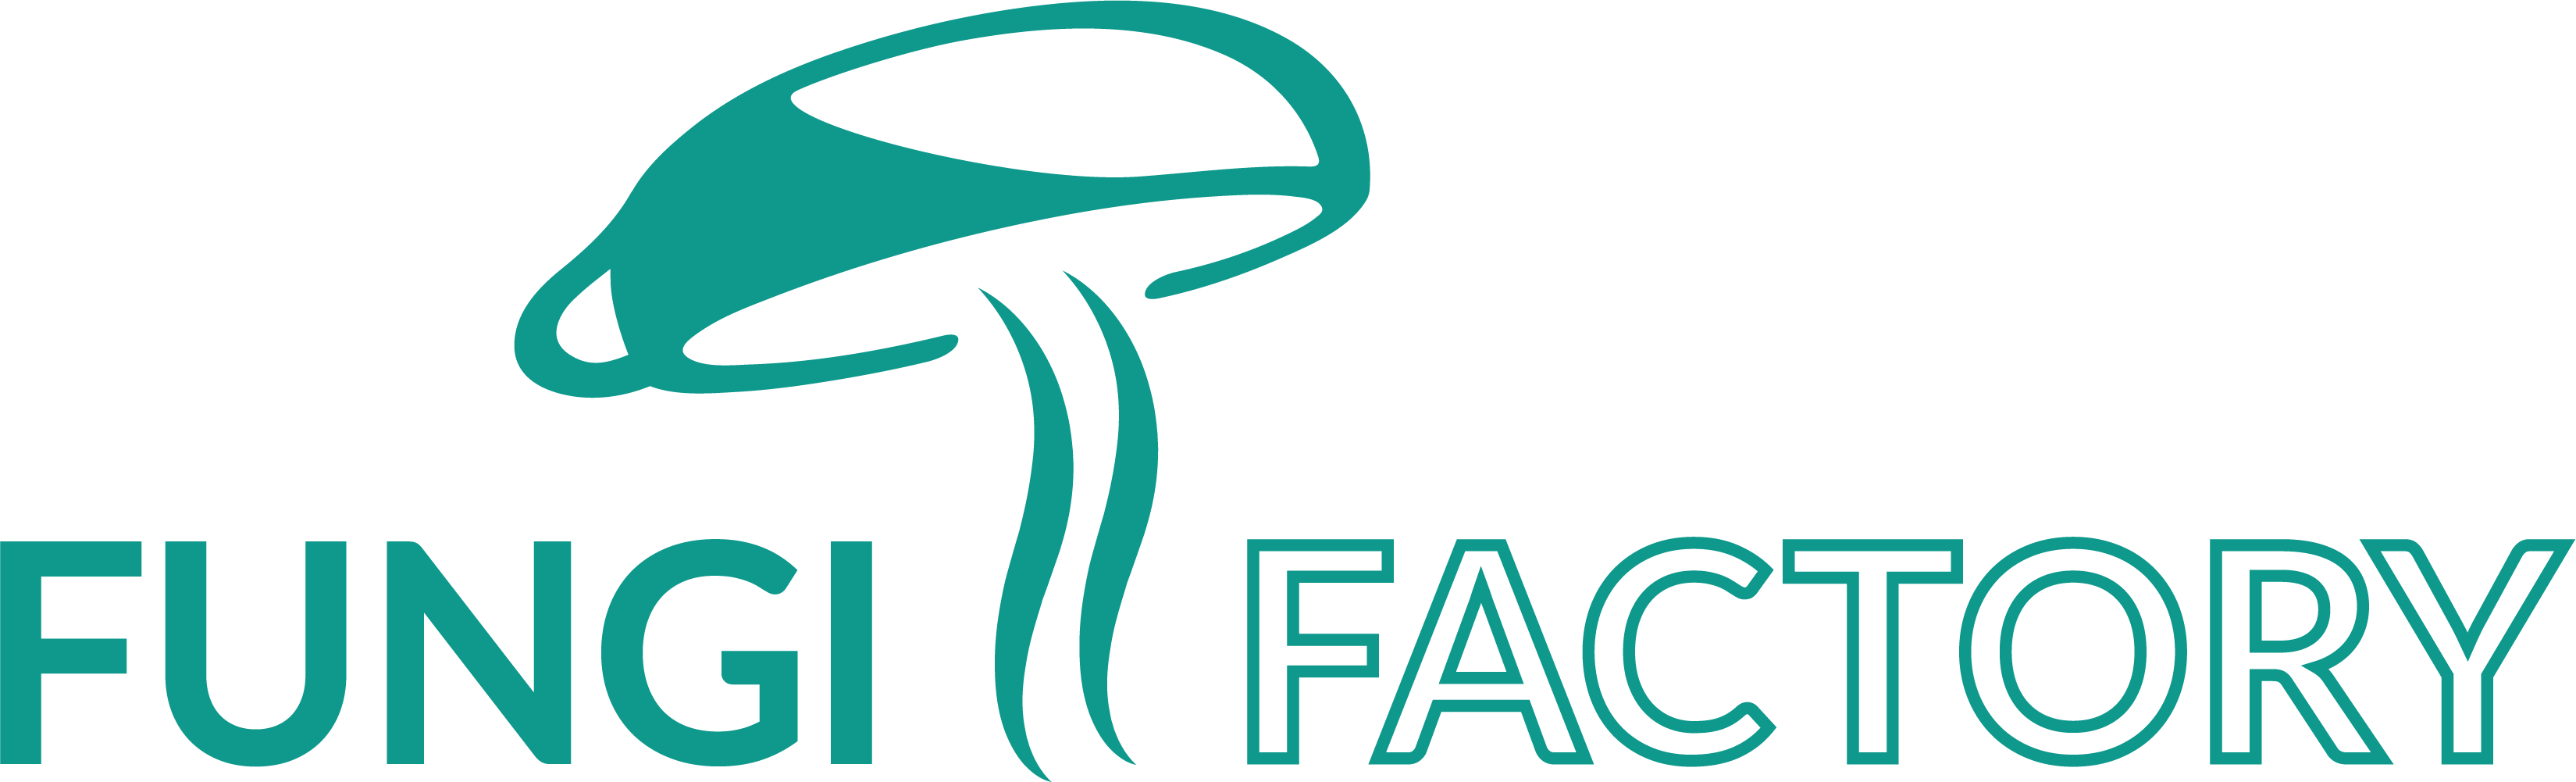 Funghi factory nieuwsbrief logo